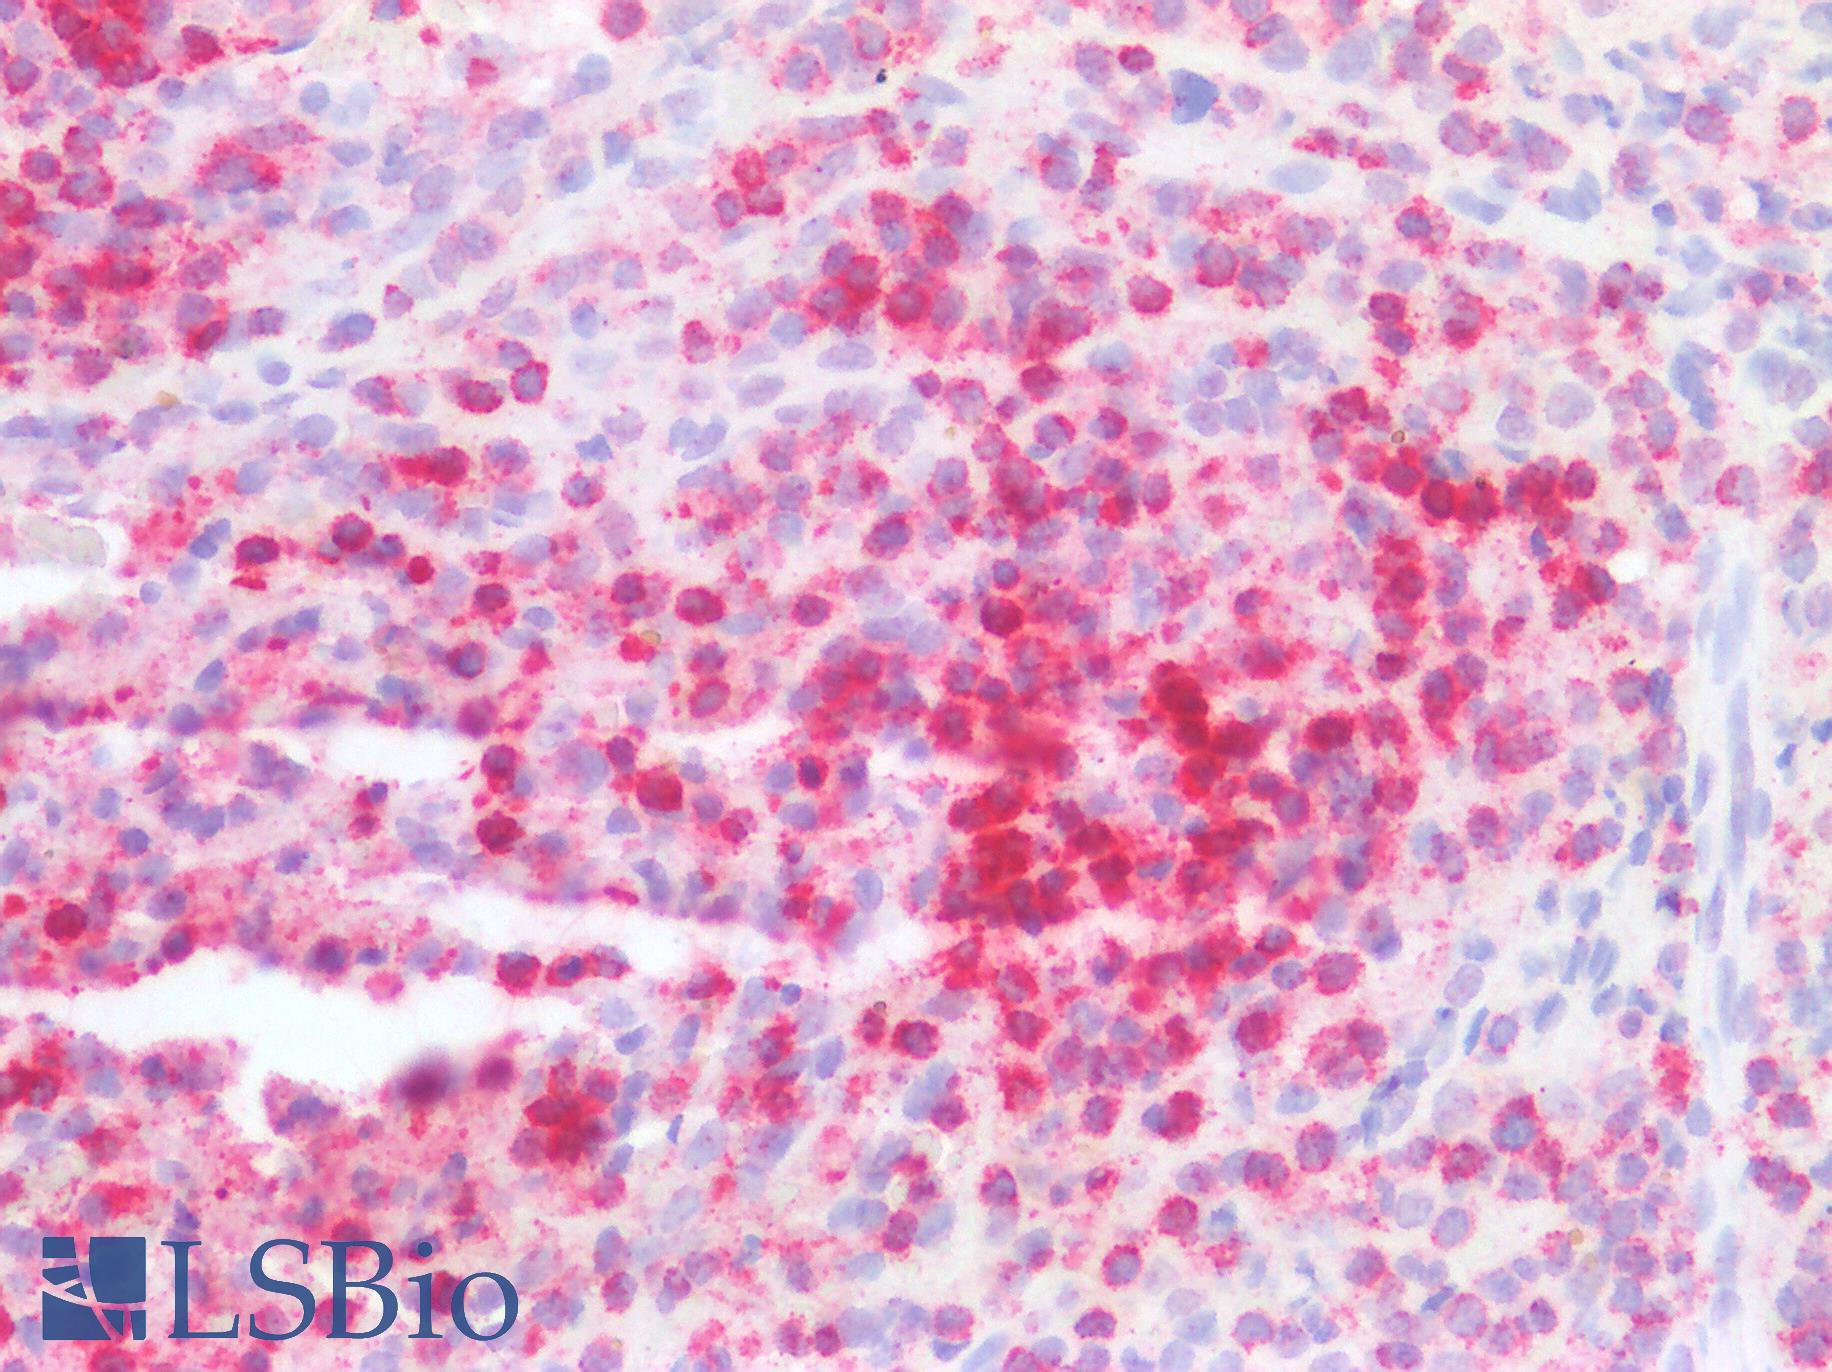 STK4 Antibody - Human Spleen: Formalin-Fixed, Paraffin-Embedded (FFPE)